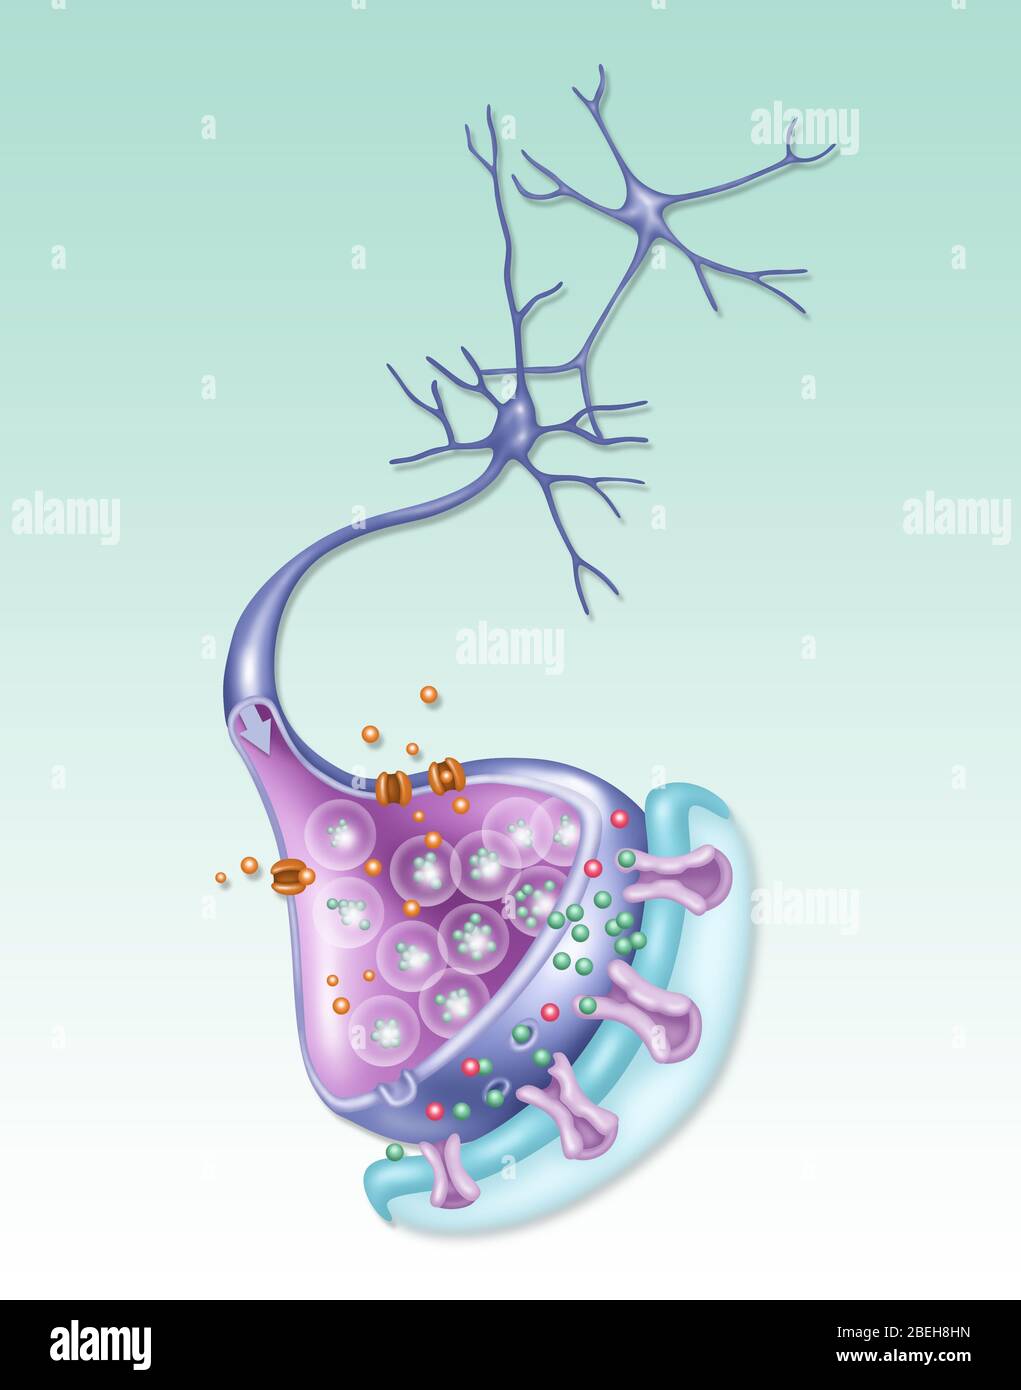 Detailliertes Neuron, Illustration Stockfoto